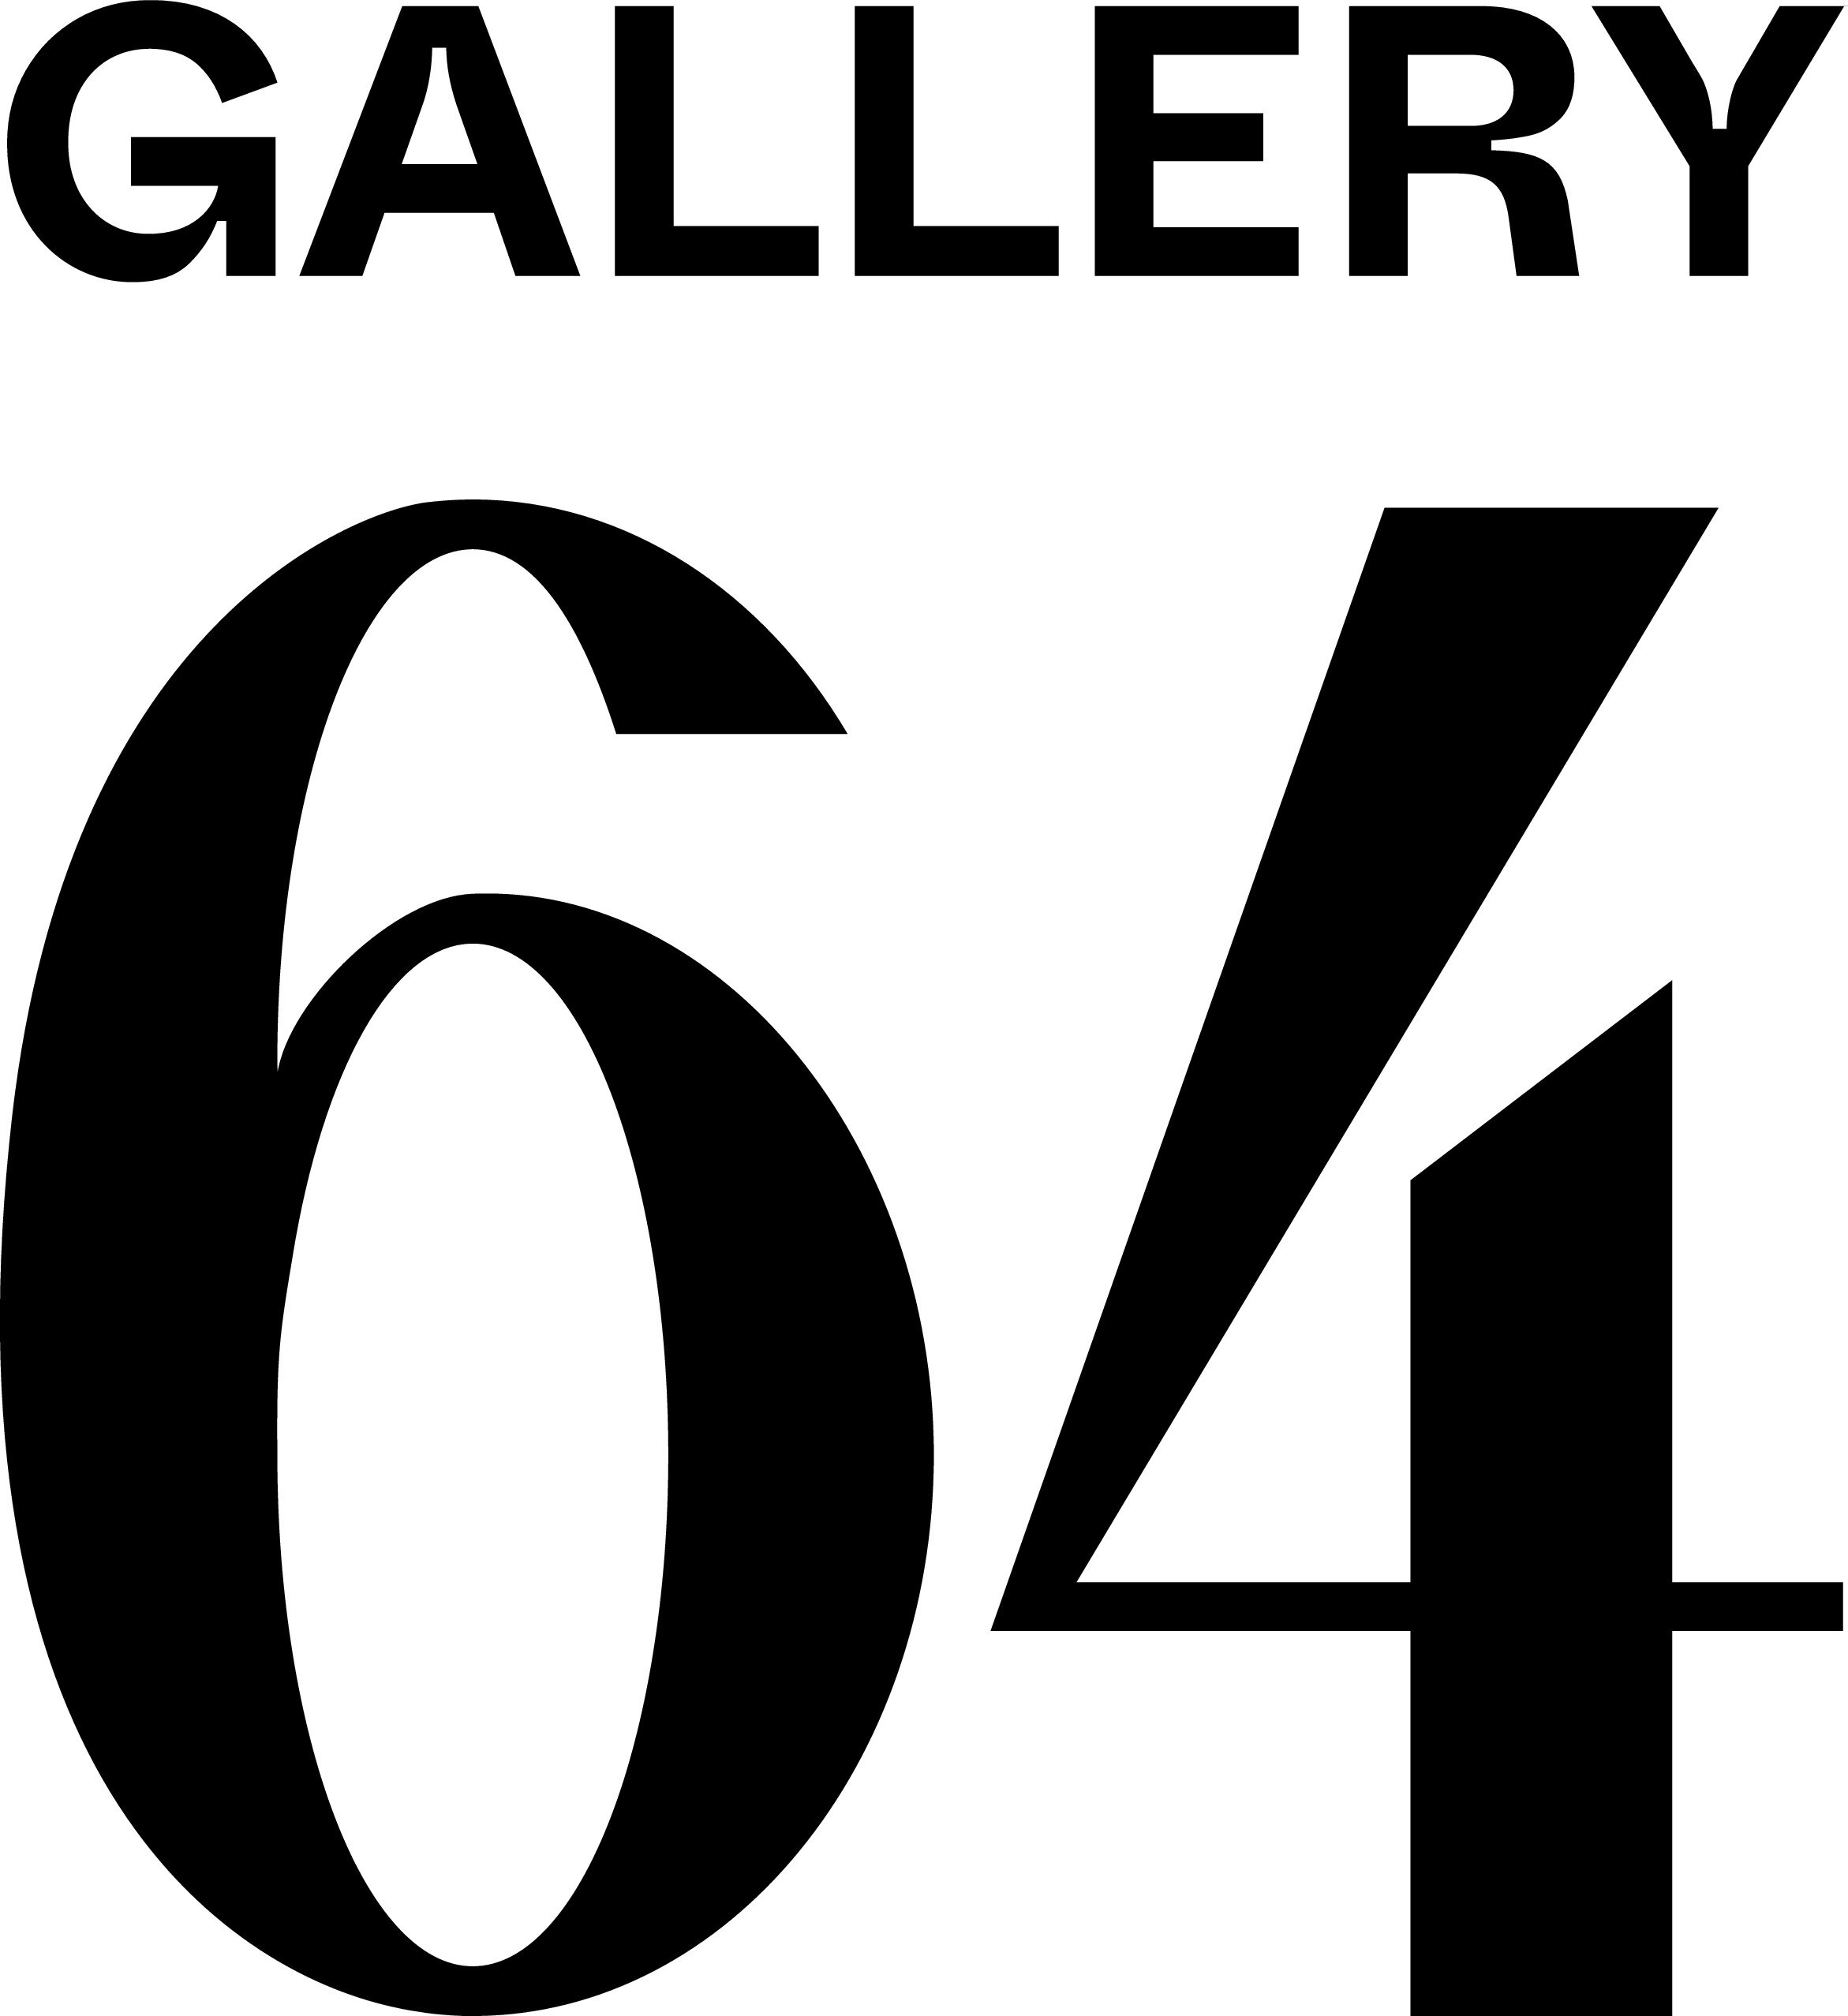 Gallery 64